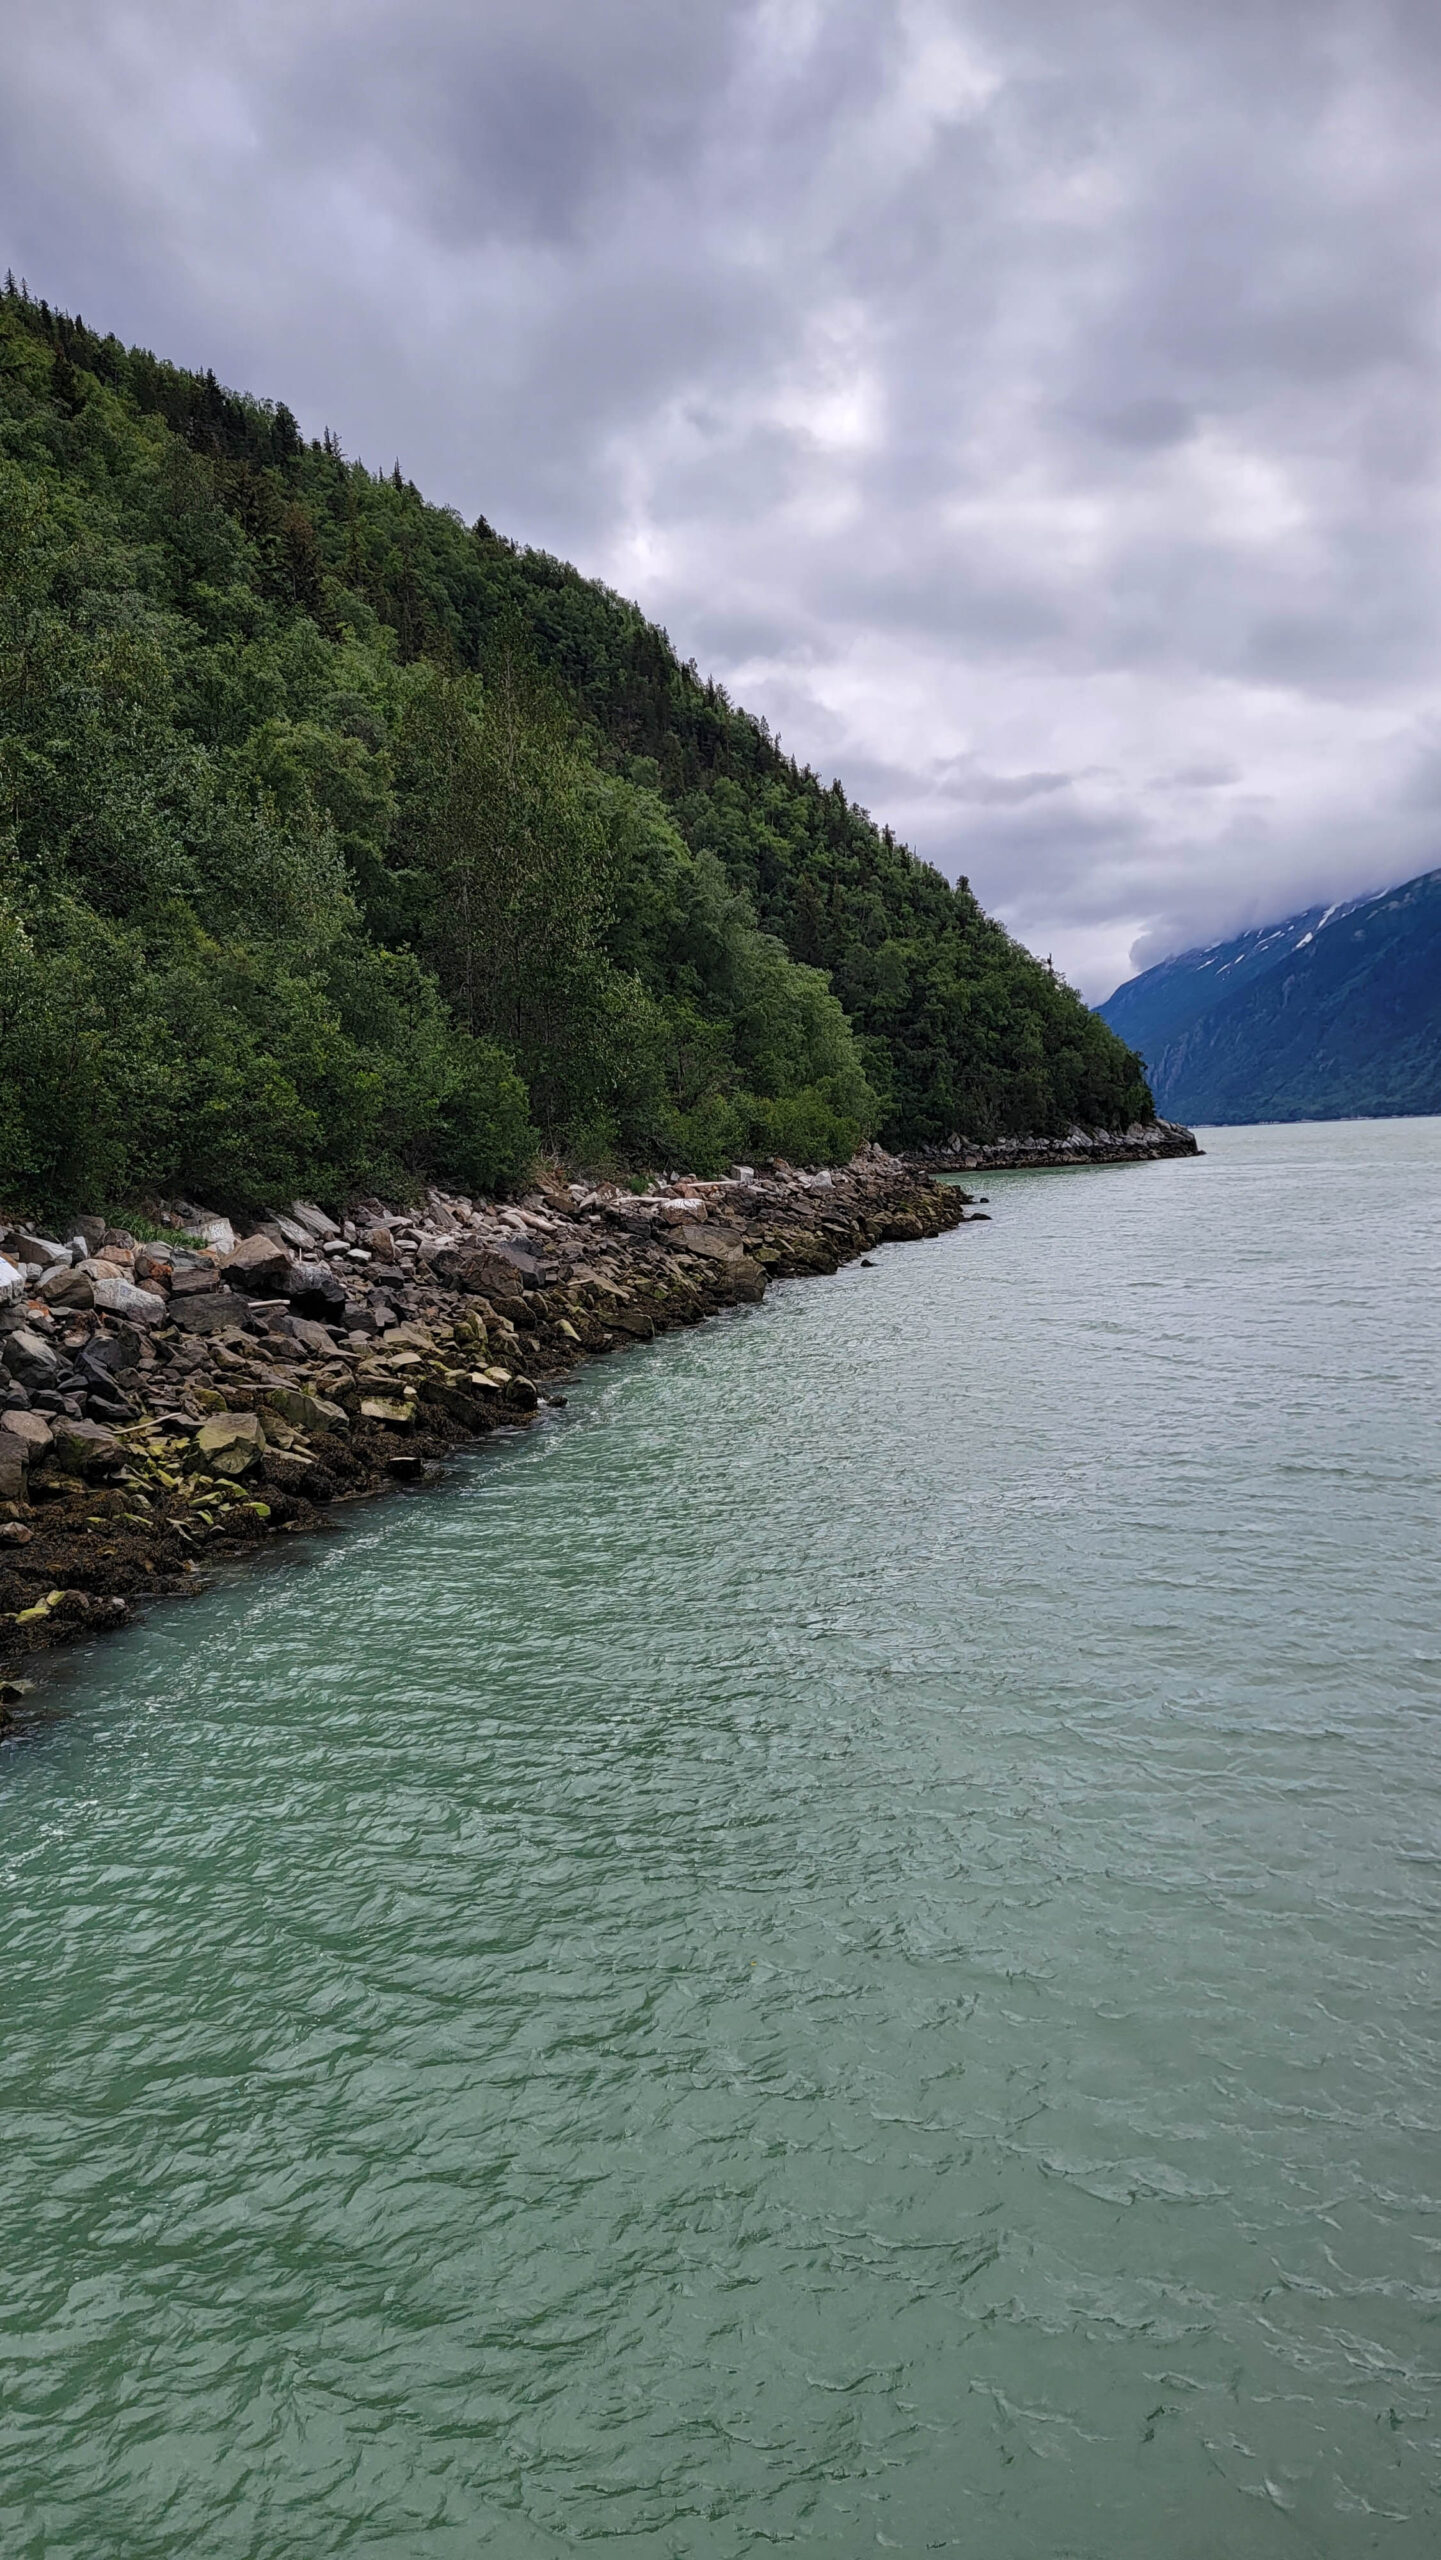 The water in Skagway Alaska is green